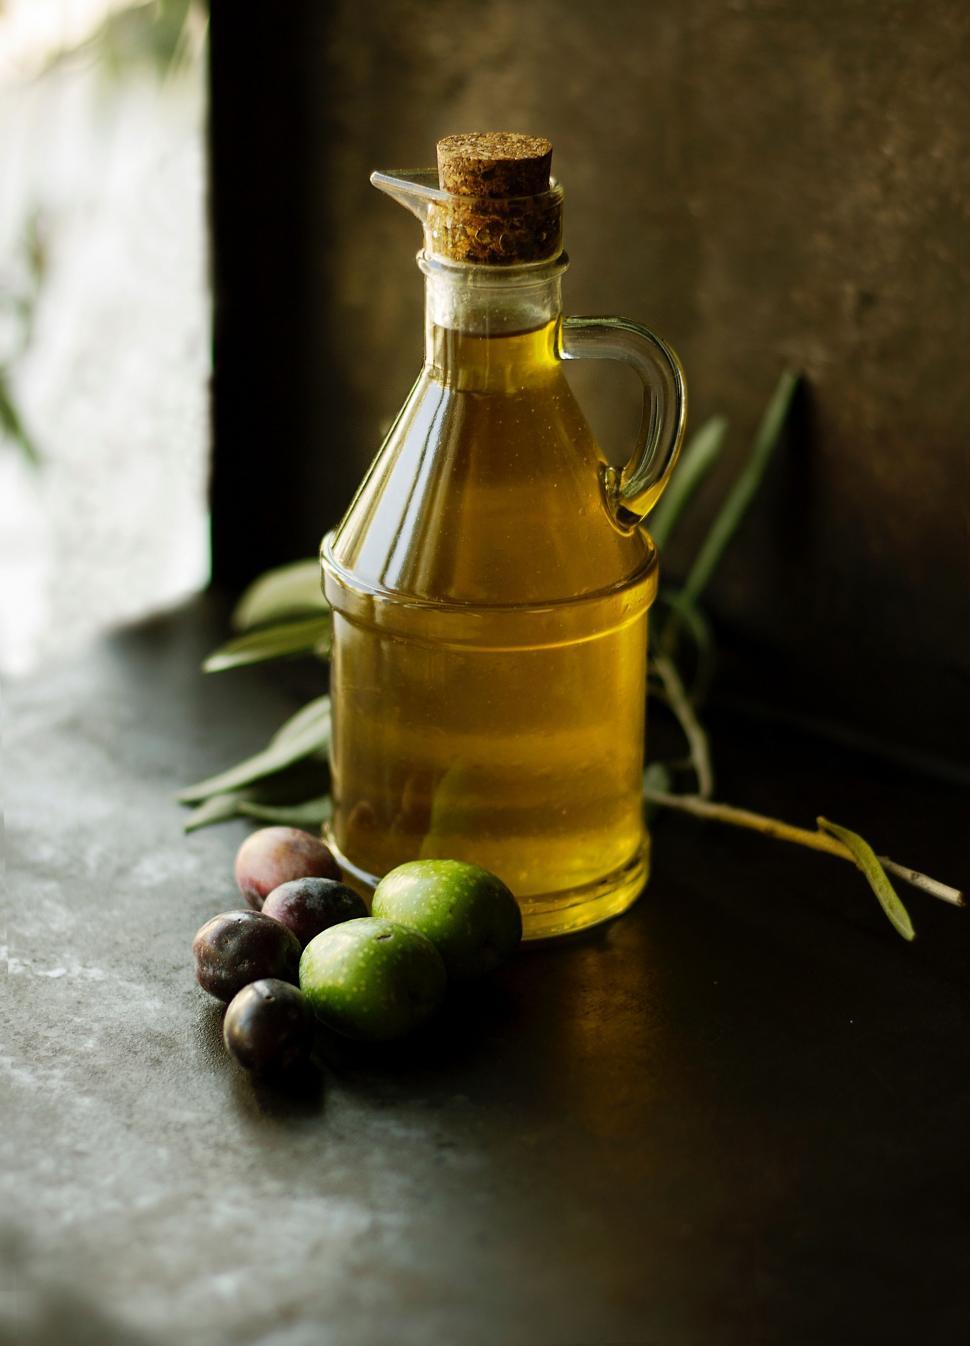 Free Image of Bottle of Olive Oil Next to Olives 